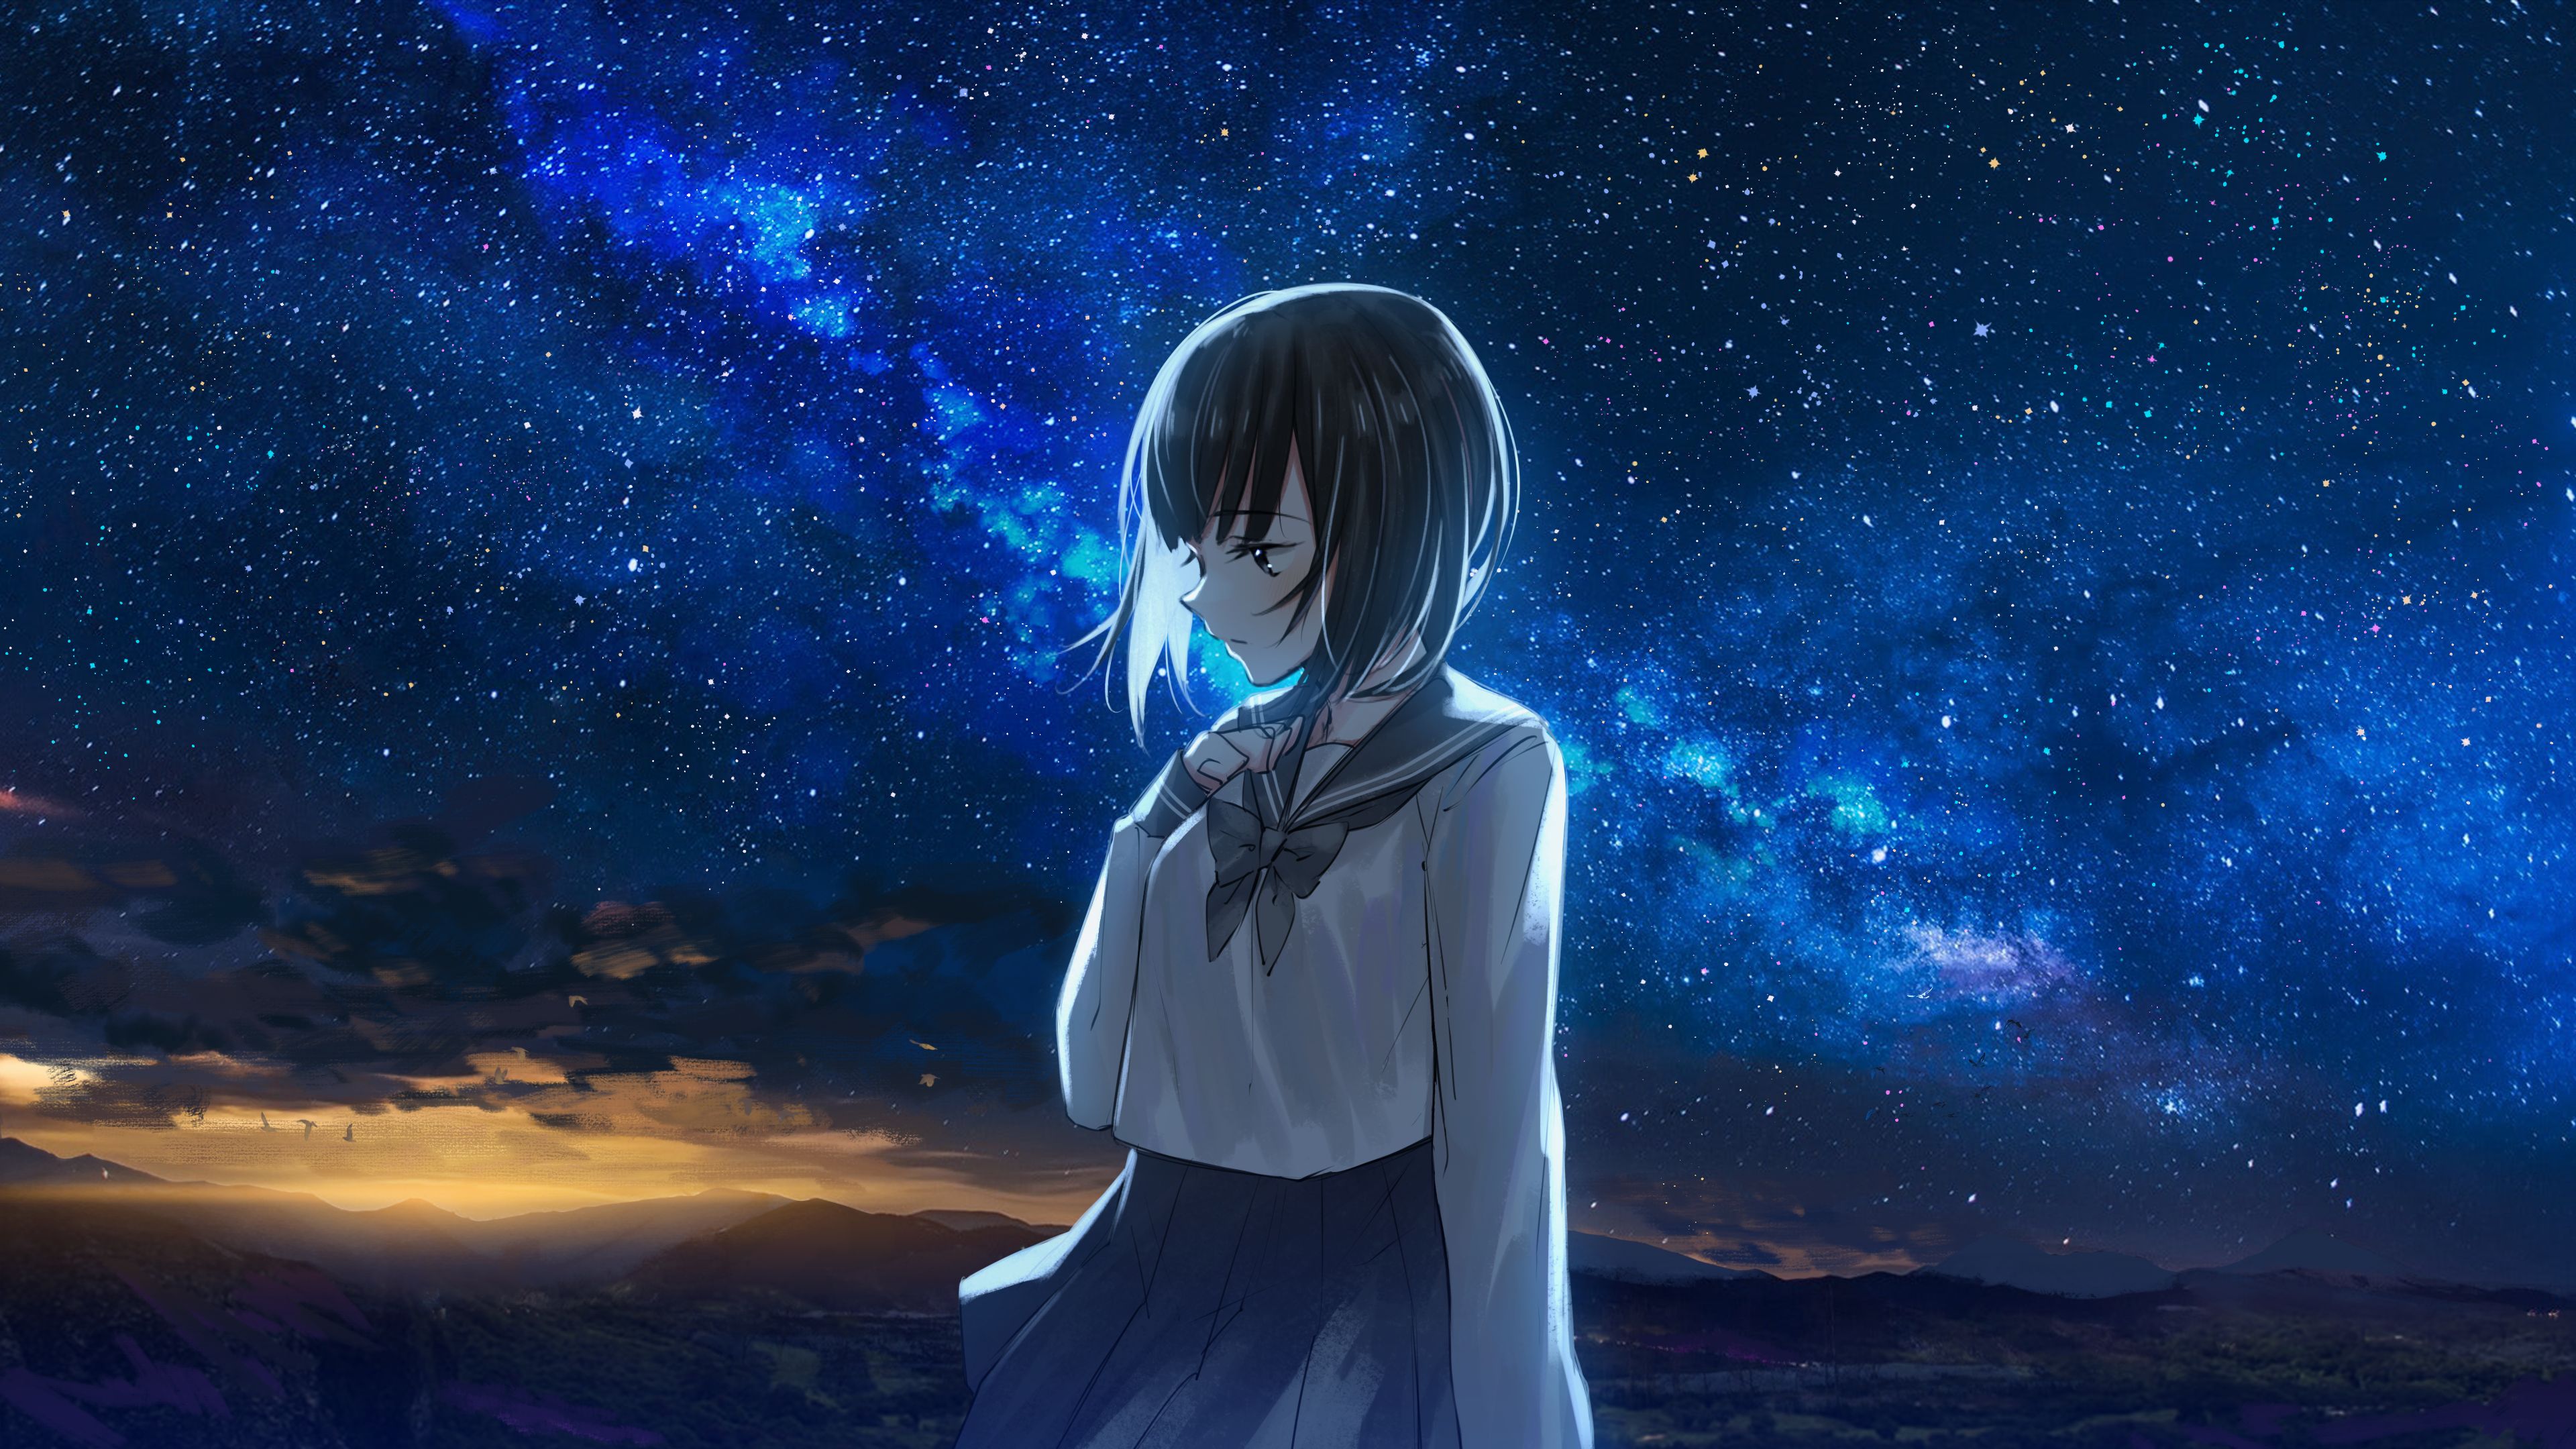 Аниме девушка в юбке на фоне ночного неба